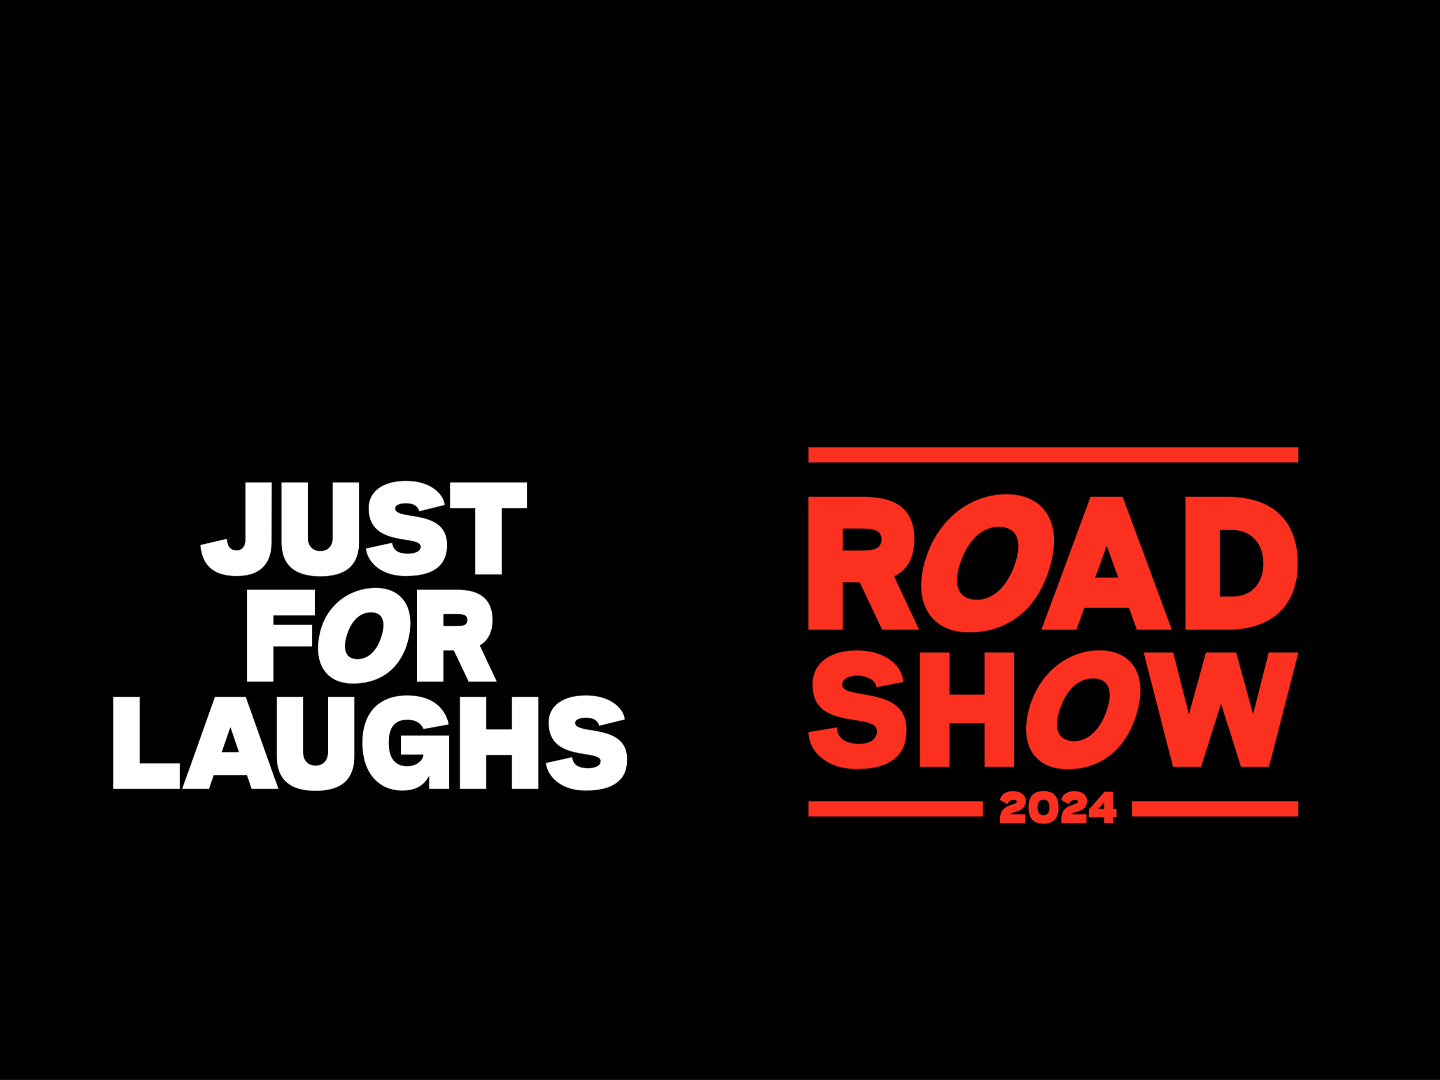 Just for Laughs Roadshow 2024 Capitol Centre